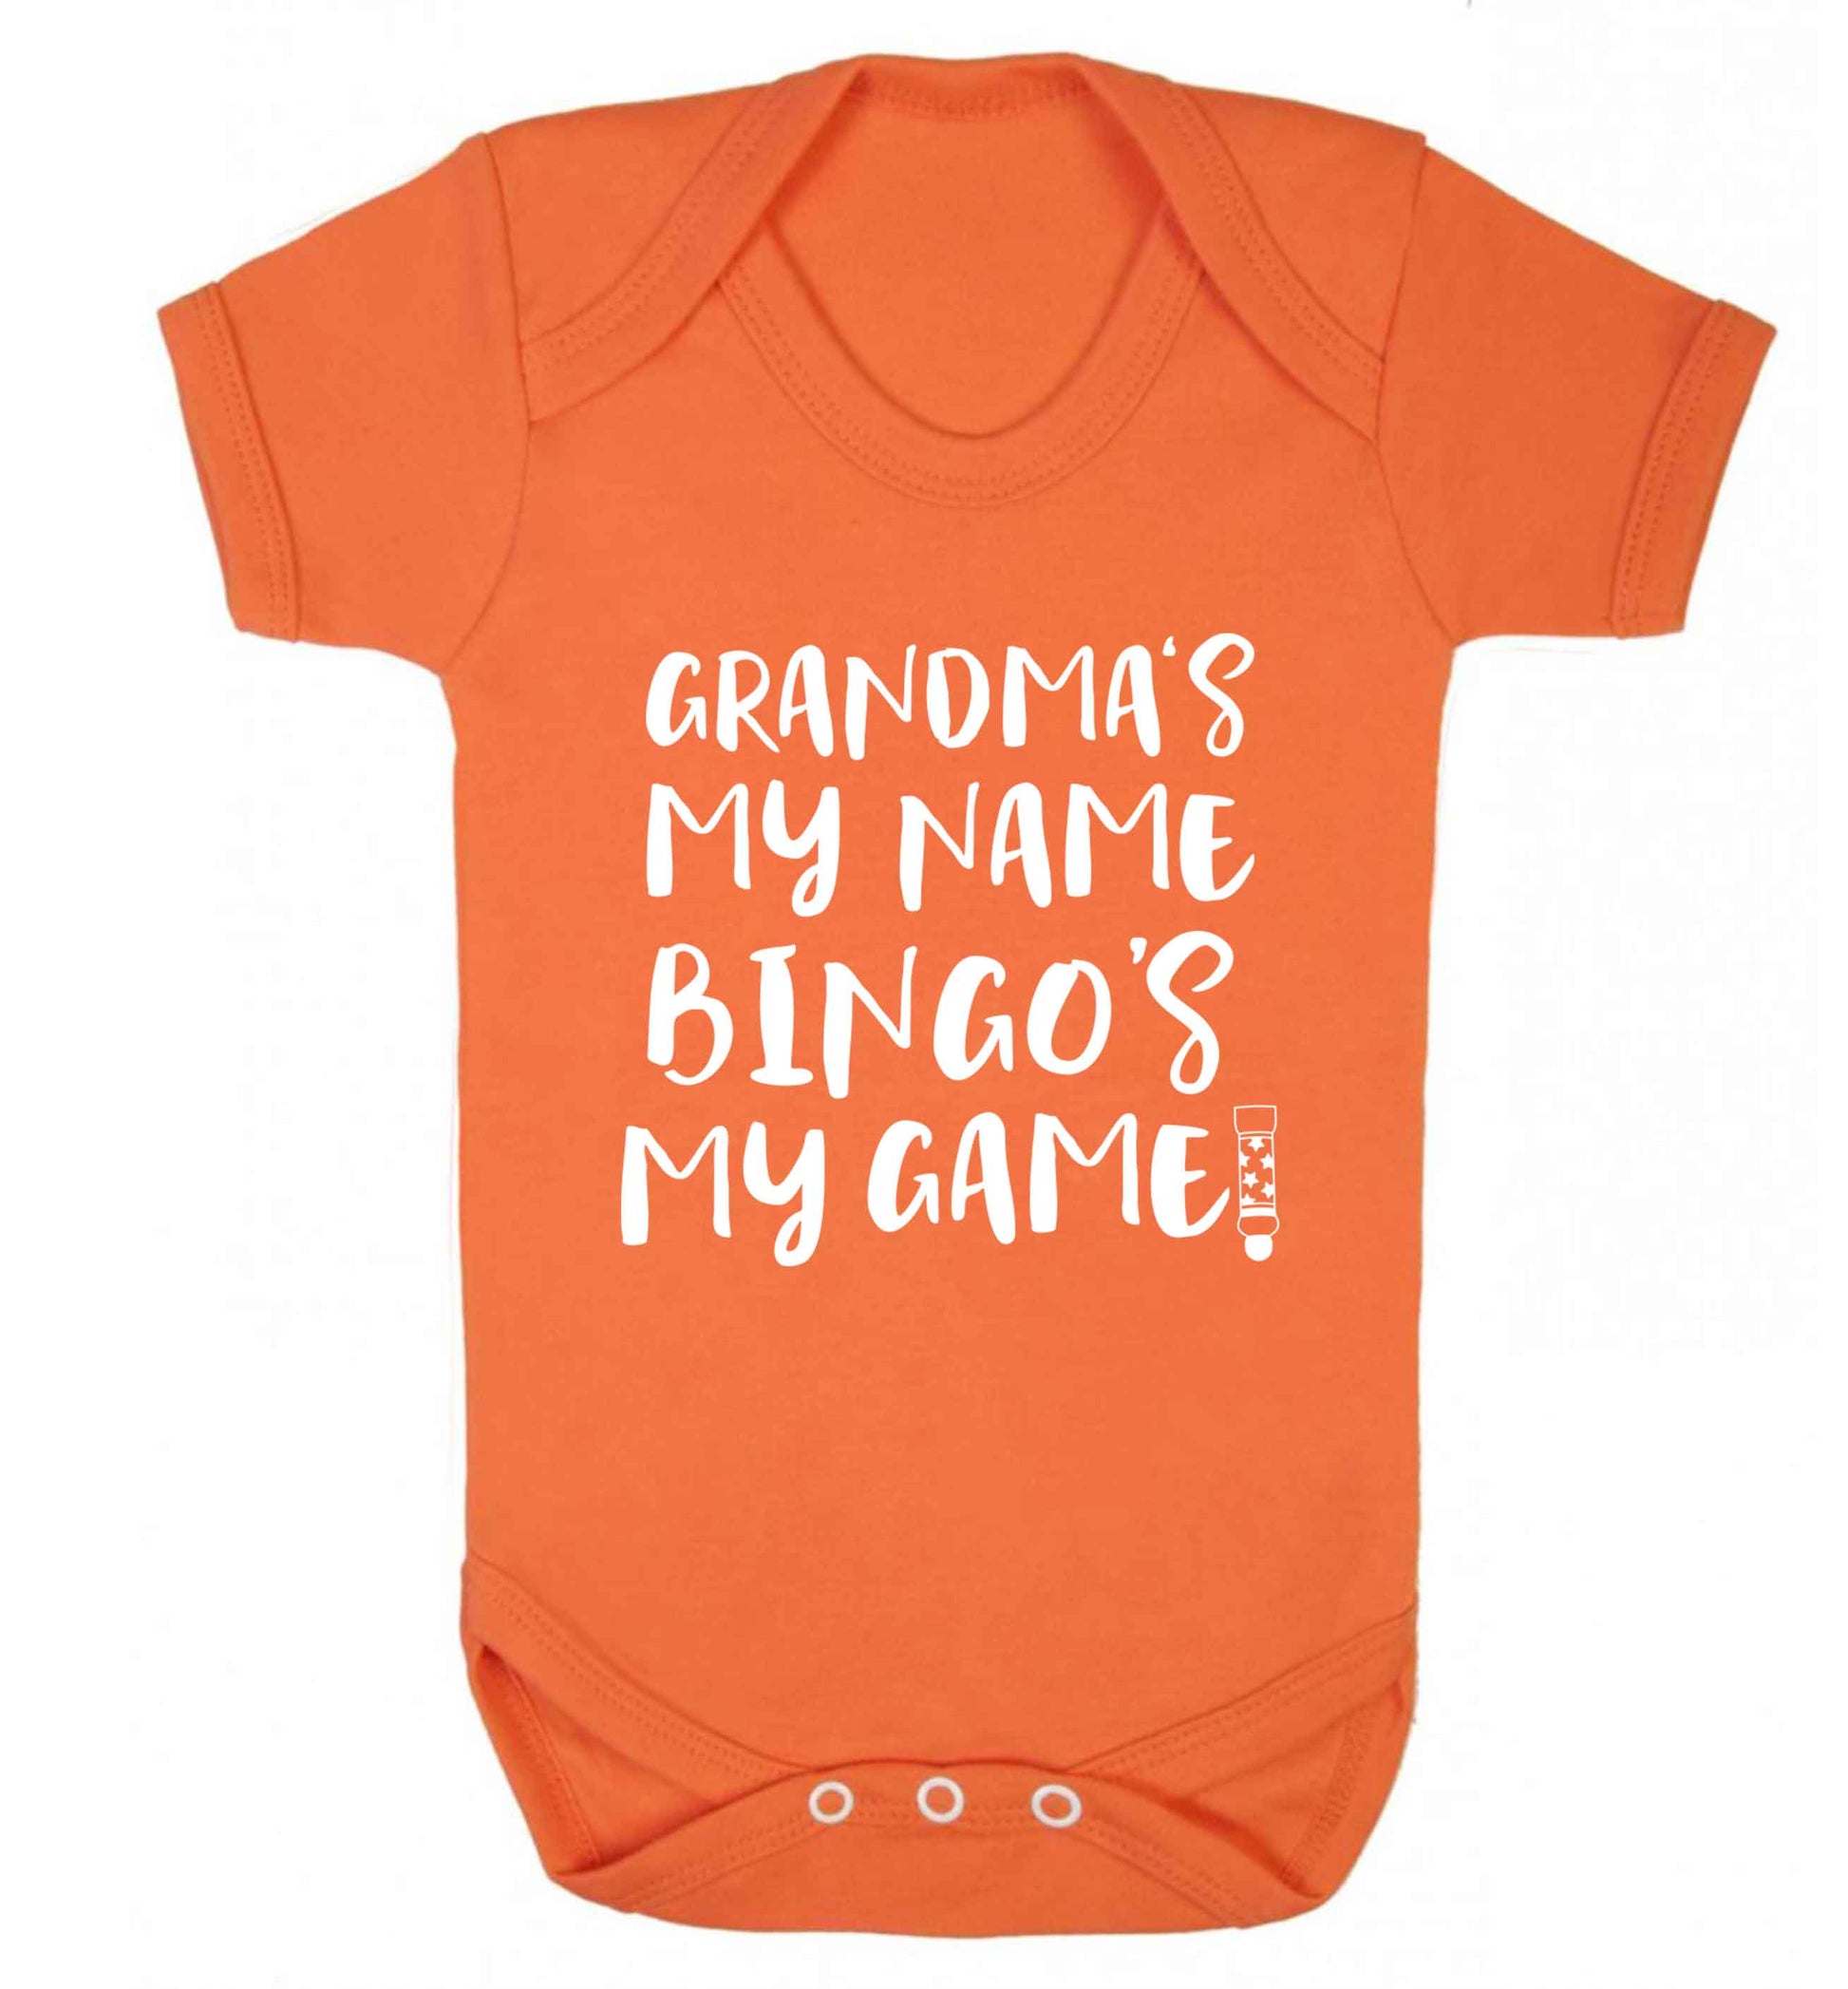 Grandma's my name bingo's my game! Baby Vest orange 18-24 months